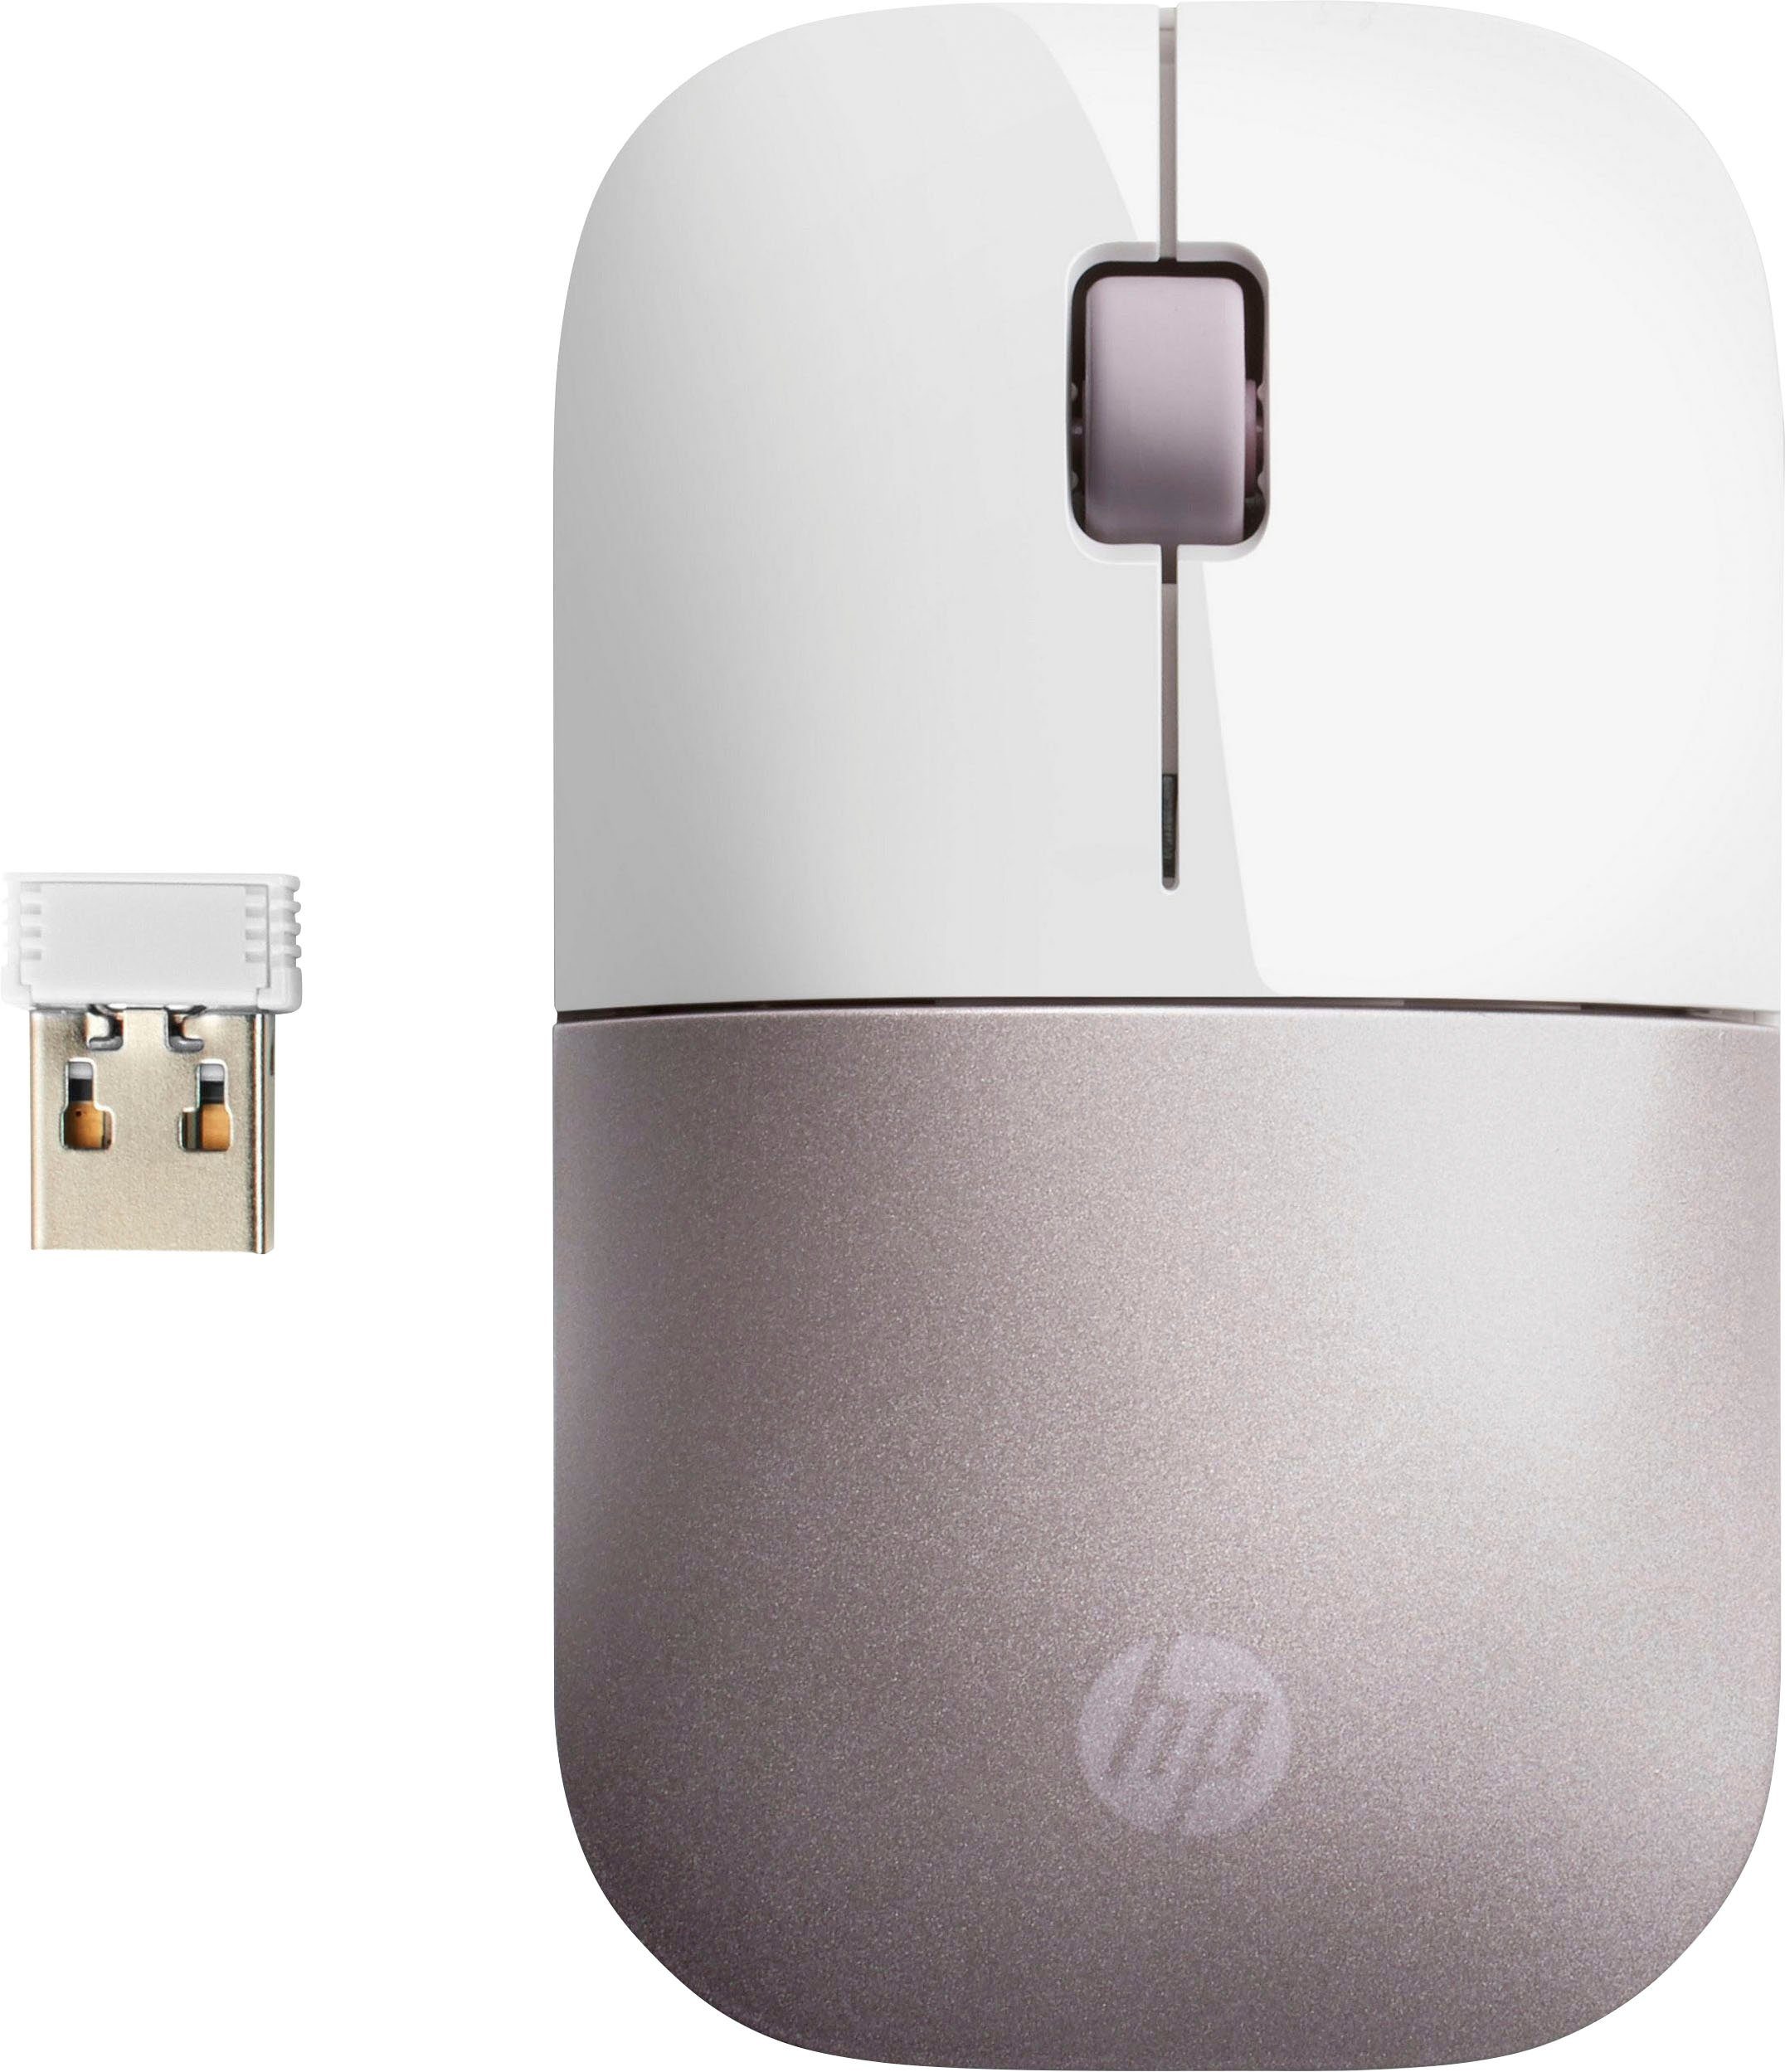 HP Z3700 Maus weiß/rosa